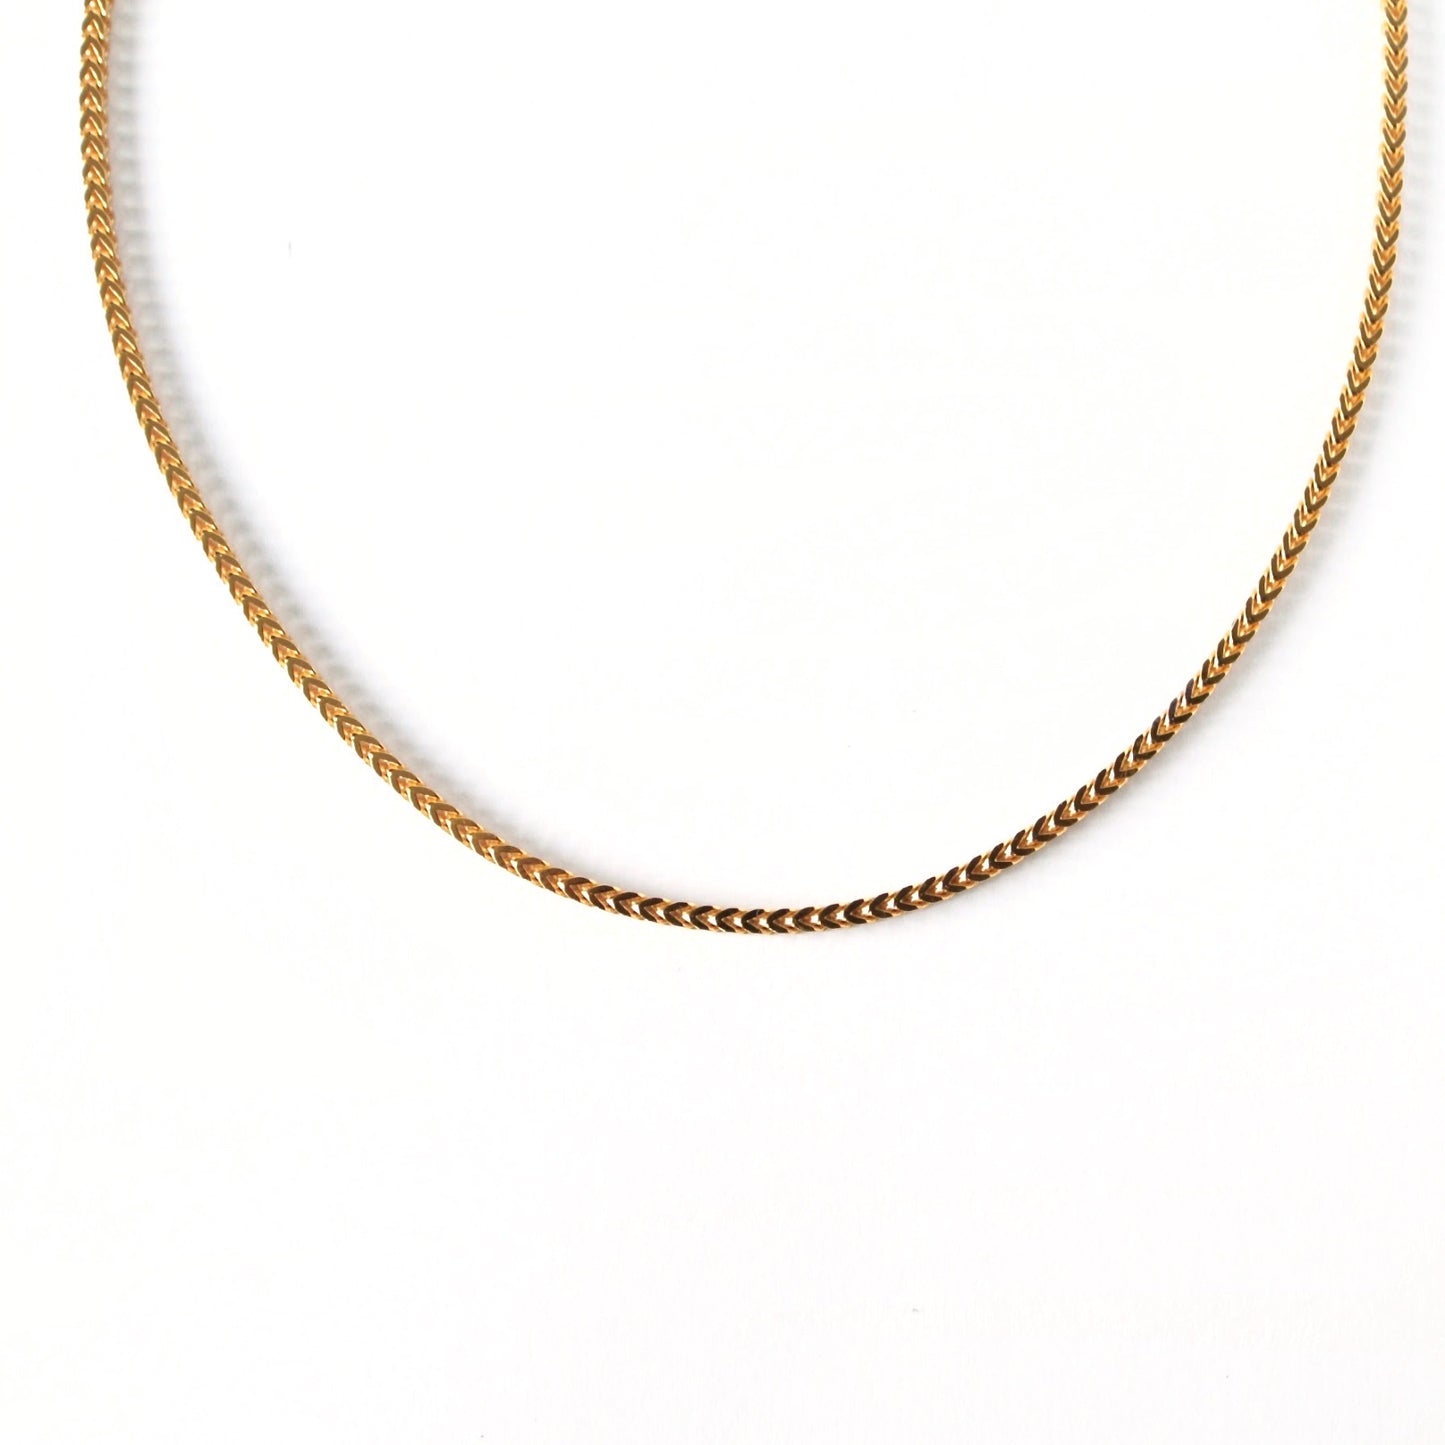 The Grandeur Chain Necklace